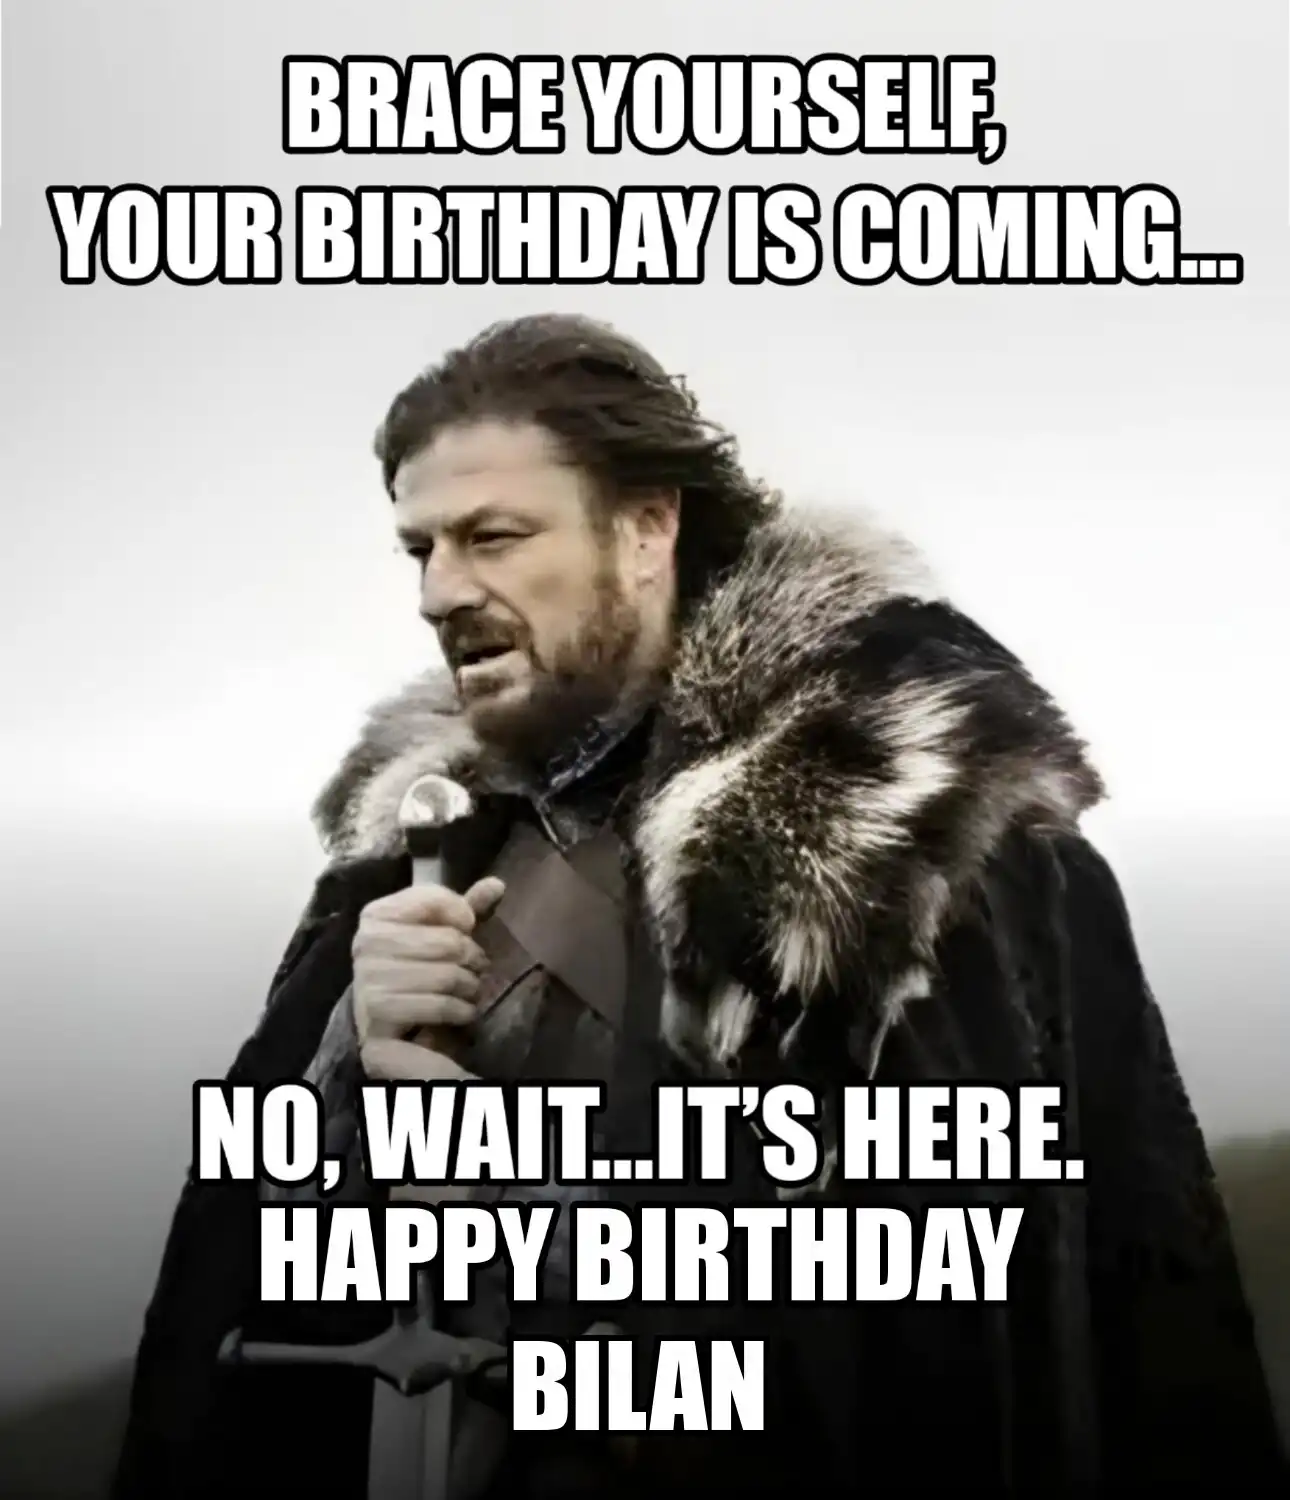 Happy Birthday Bilan Brace Yourself Your Birthday Is Coming Meme